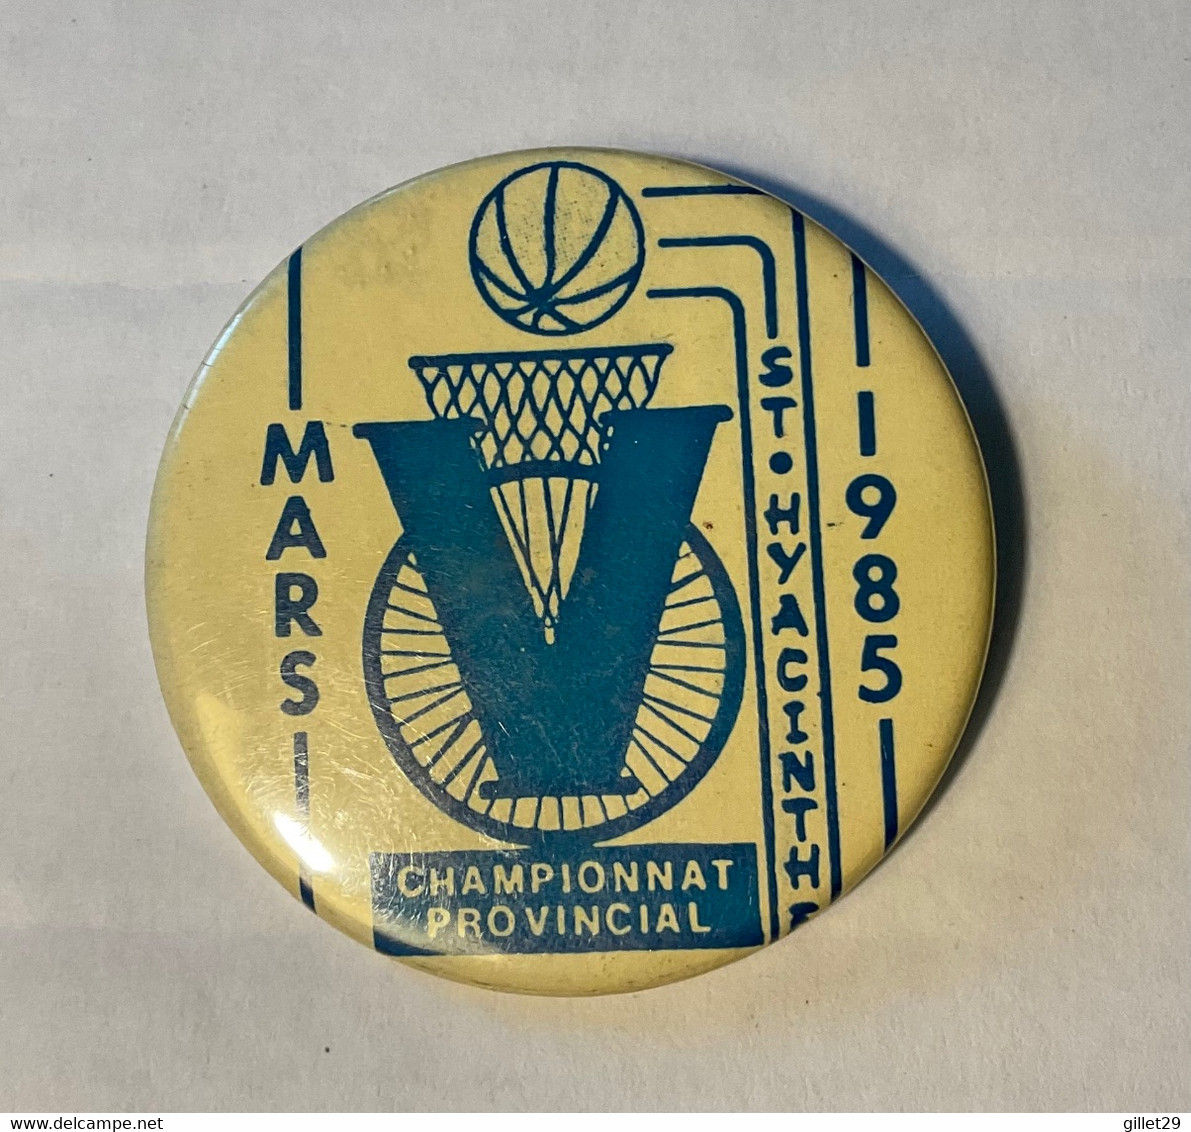 PIN’S, BROCHE, MACARON - CHAMPIONNAT PROVINCIAL DE BASKETBALL ST HYACINTHE, QUÉBEC EN MARS 1985 - - Basketball